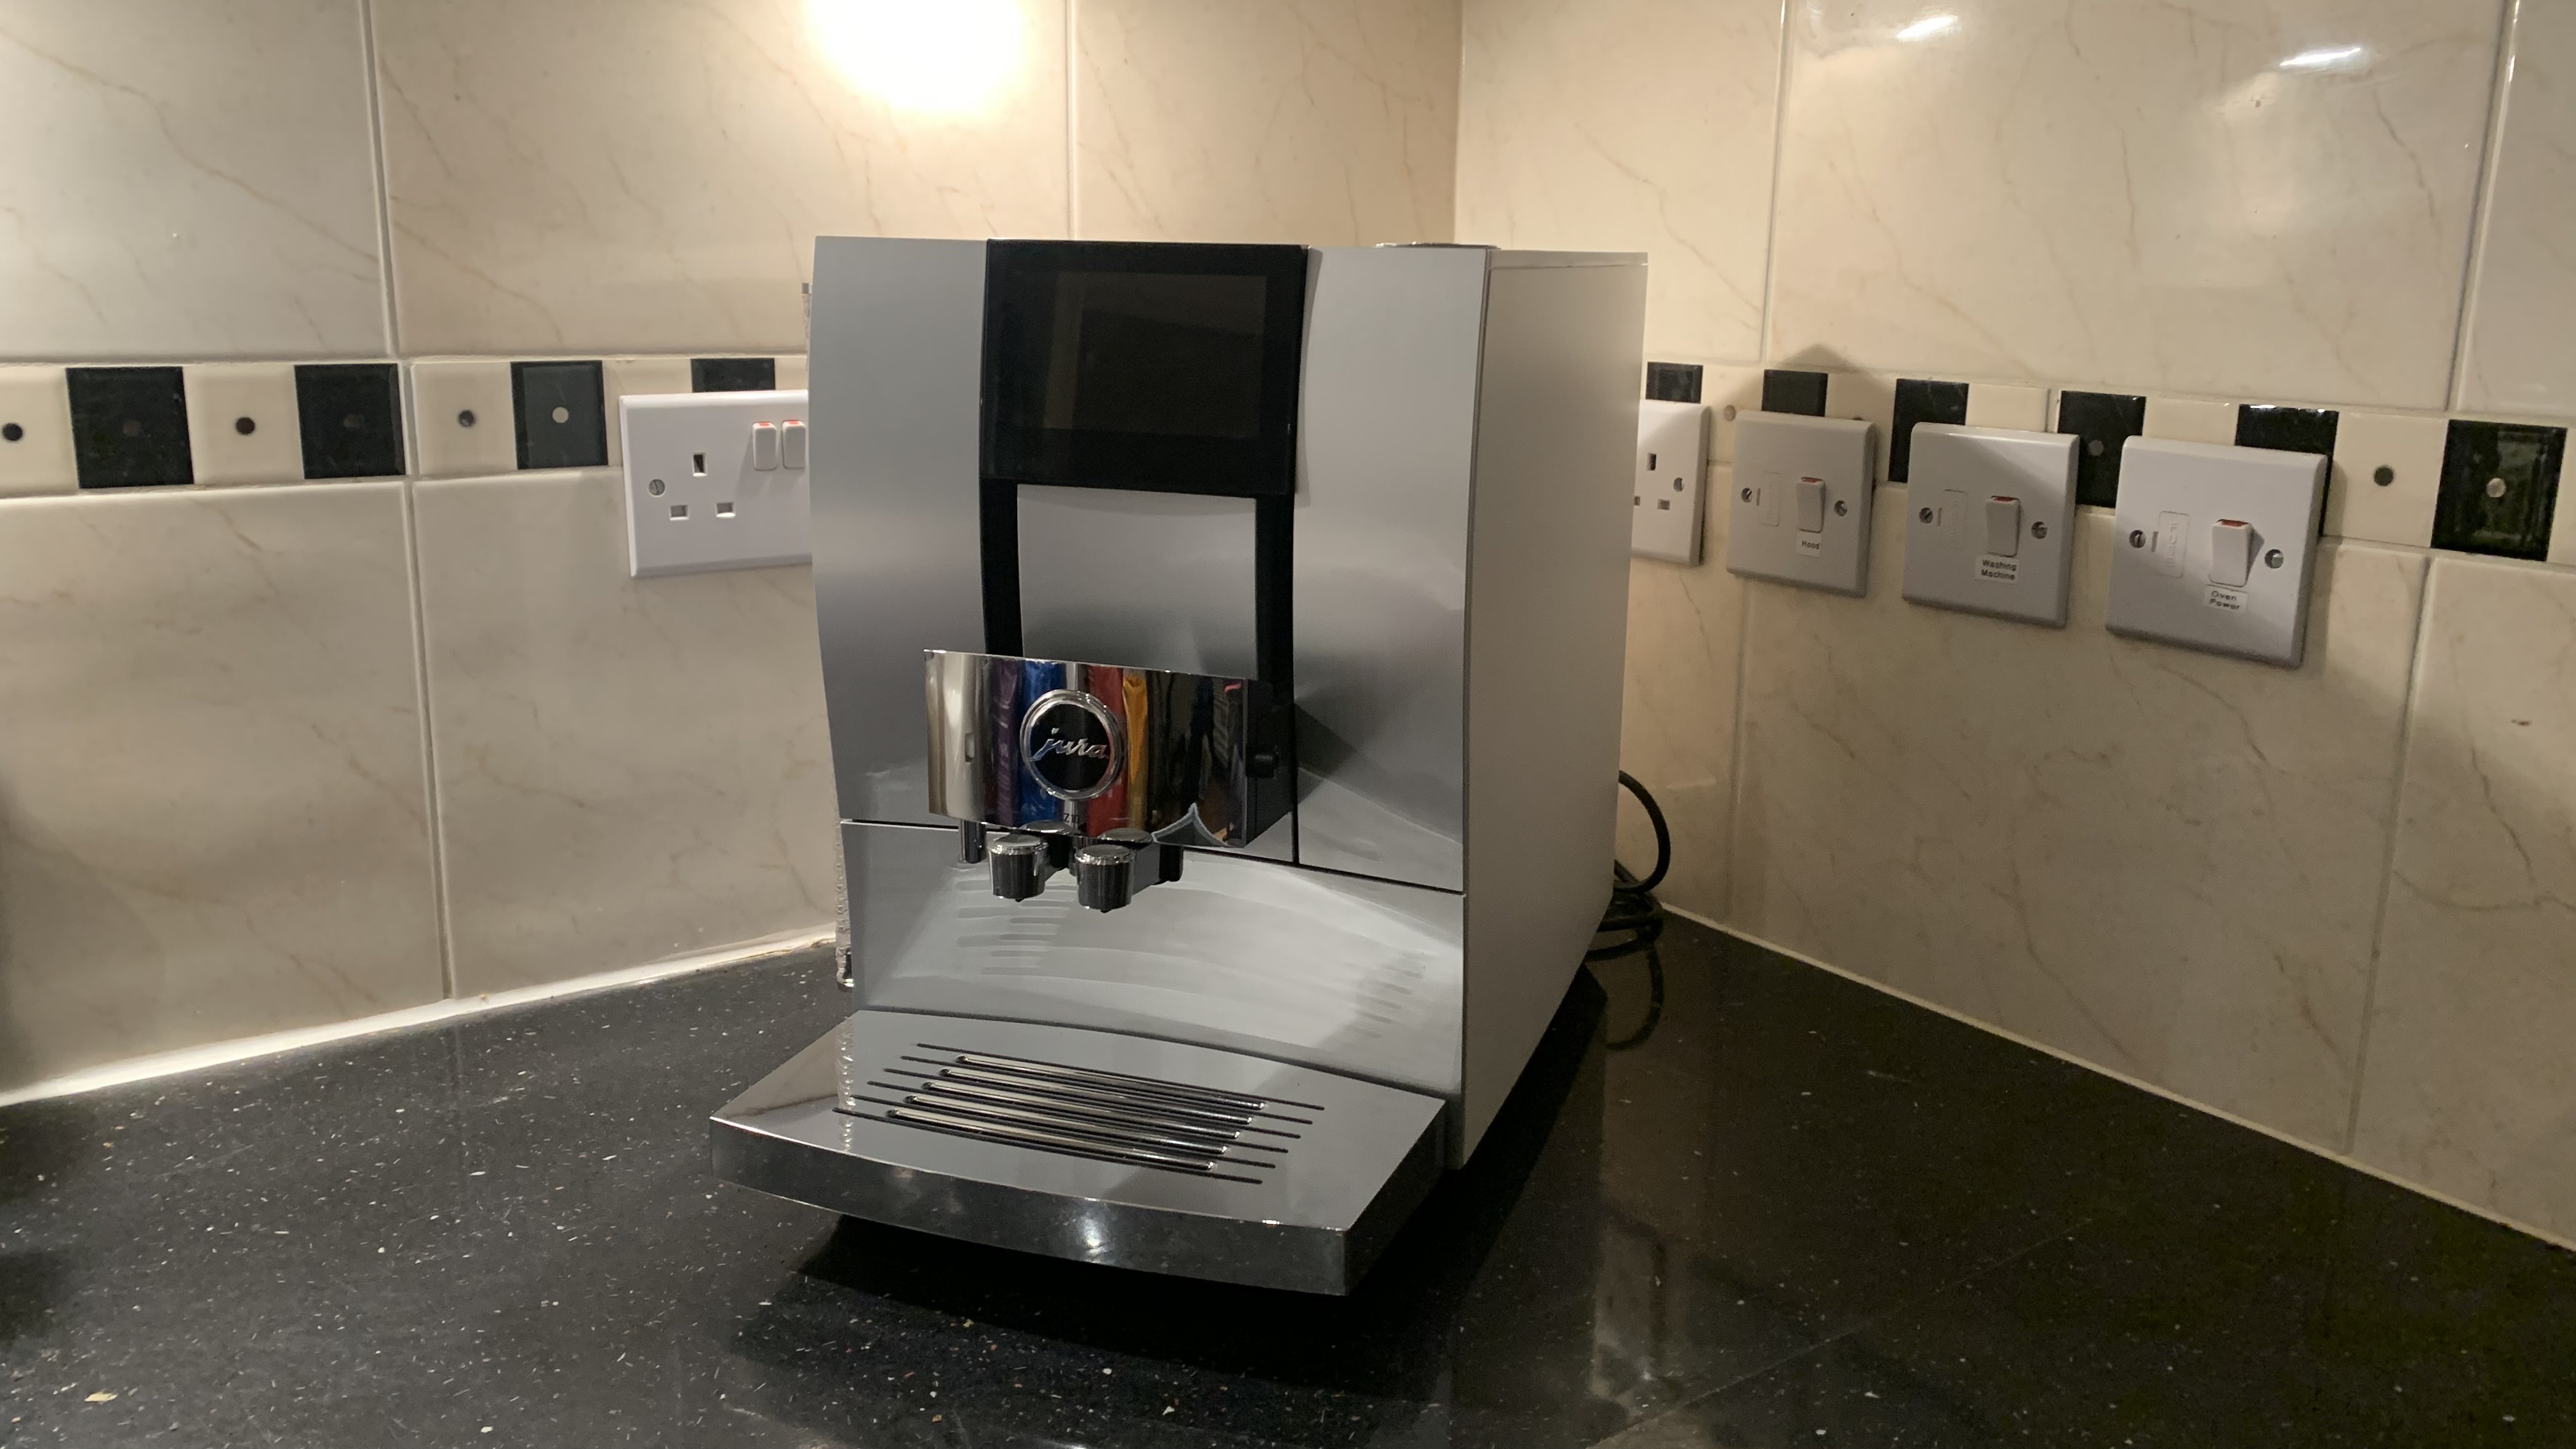 On our radar: The smart wireless Wi-Fi coffee machine from Smarter